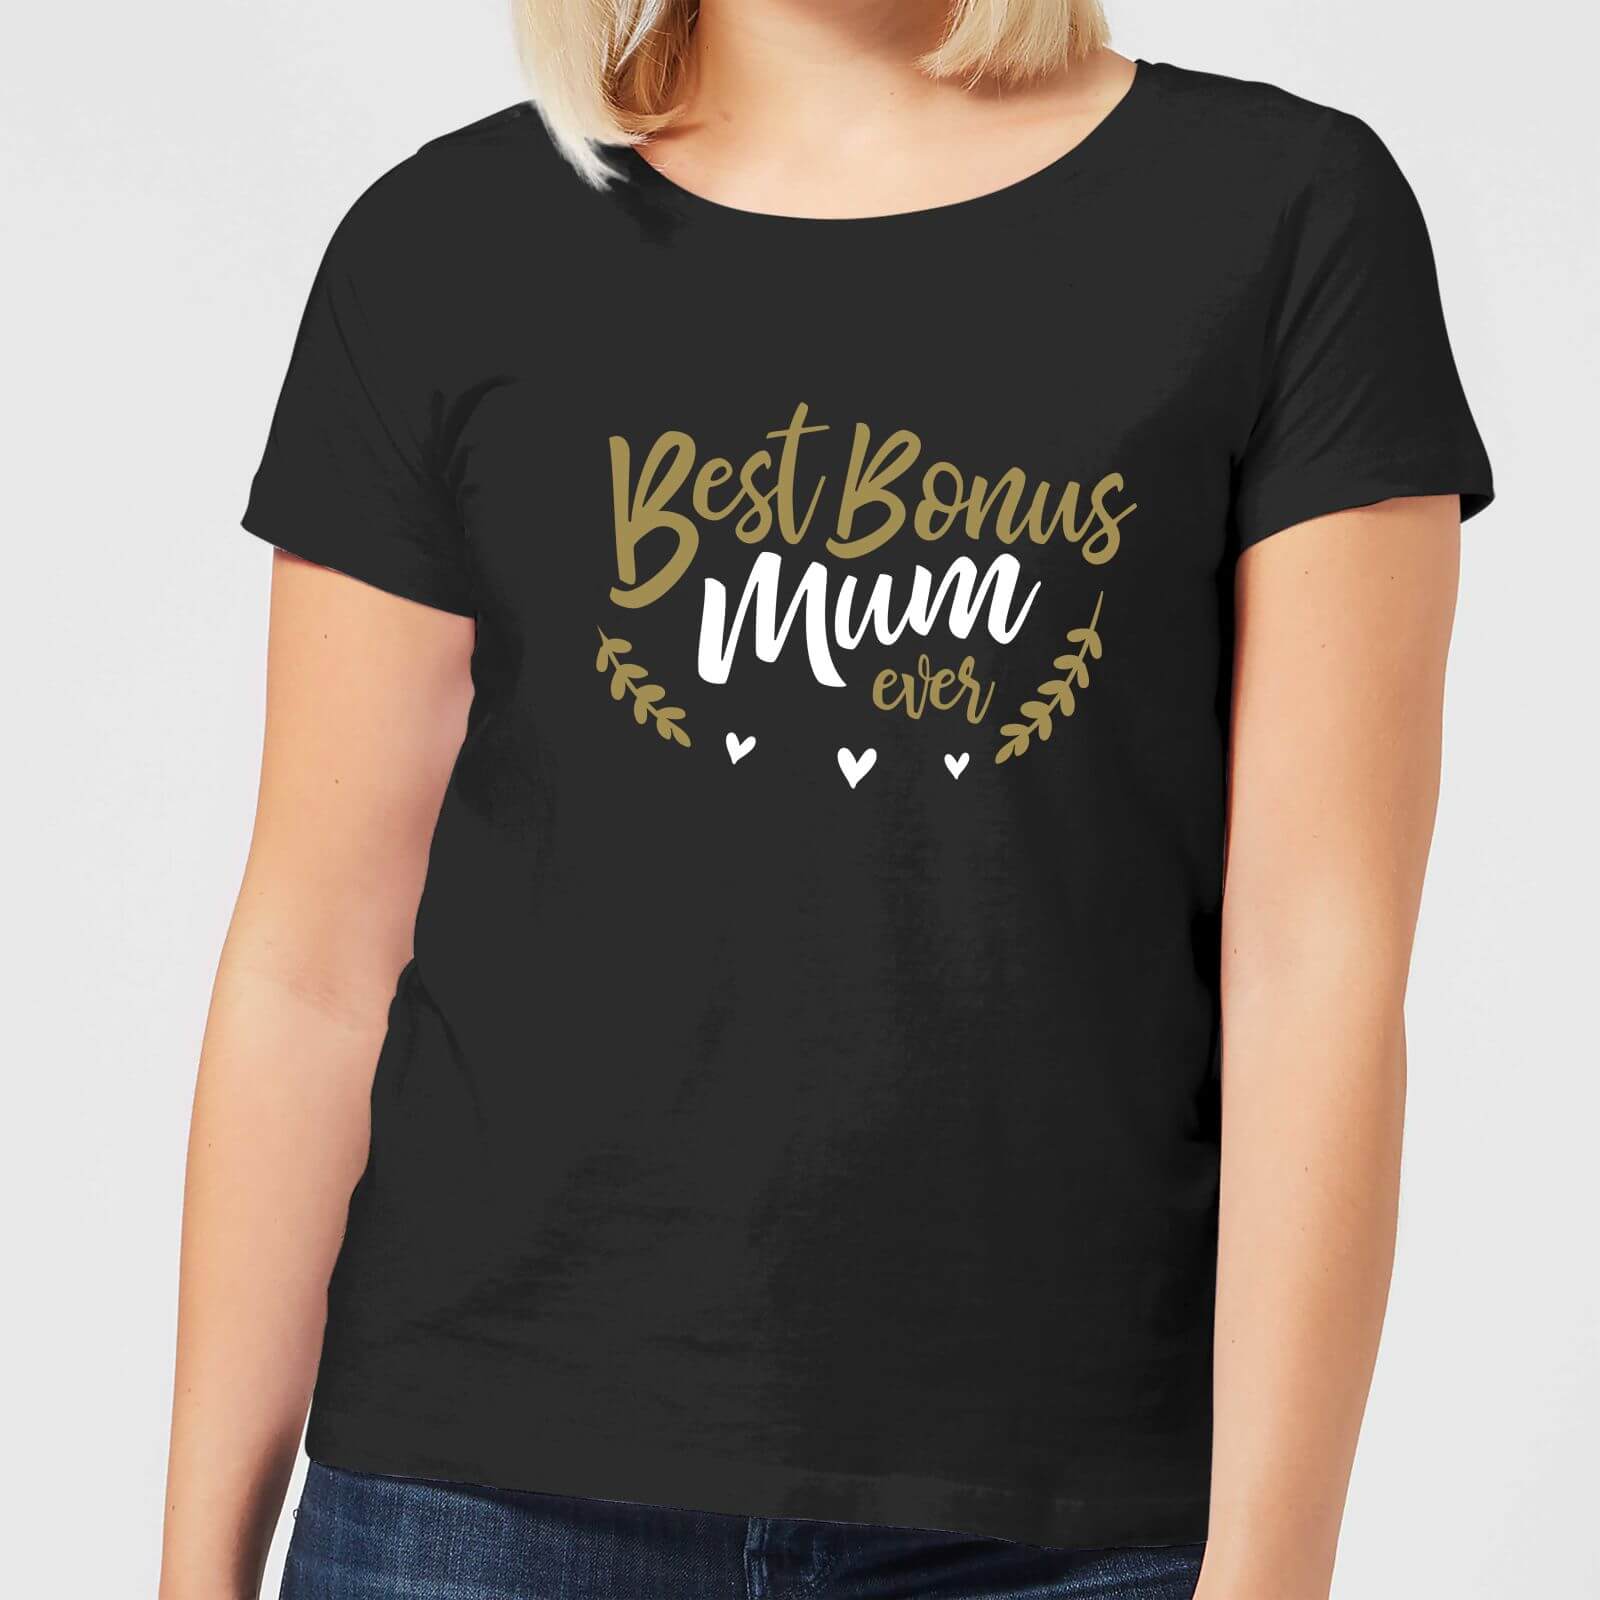 Best Bonus Mum Ever Women's T-Shirt - Black - S - Black